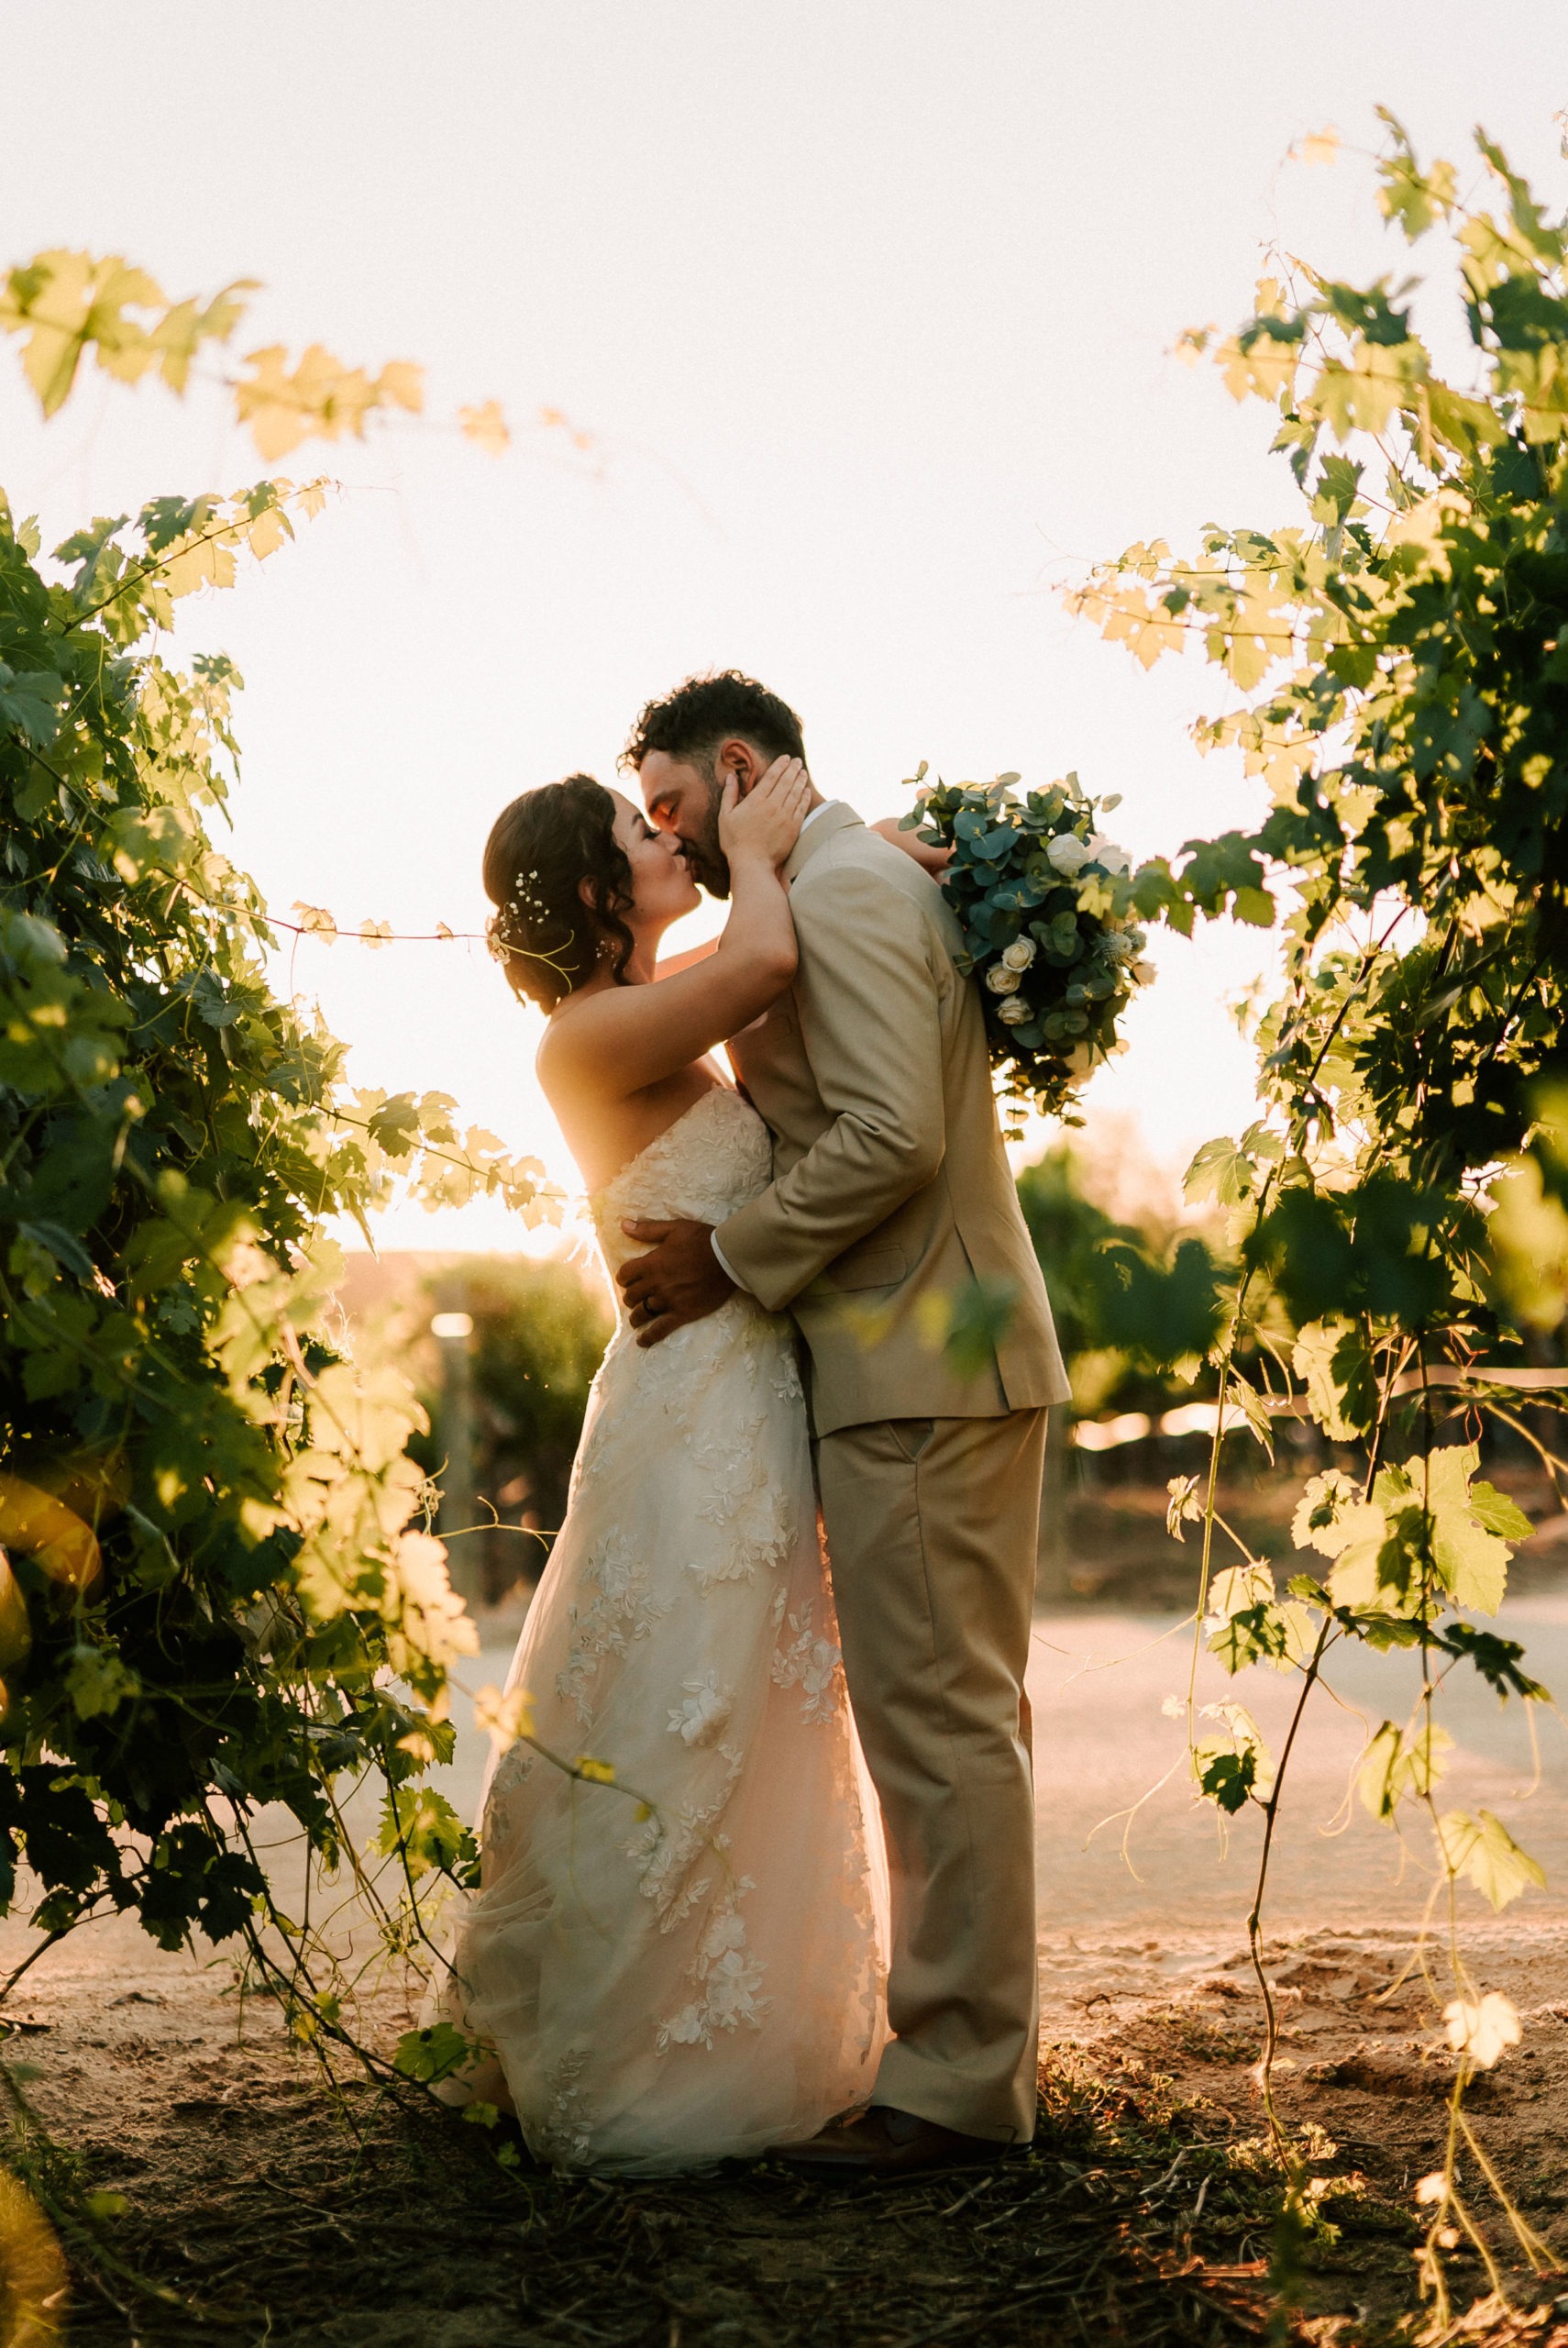 Epic Summer Wedding at Peltzer Winery - Brianna & Michael